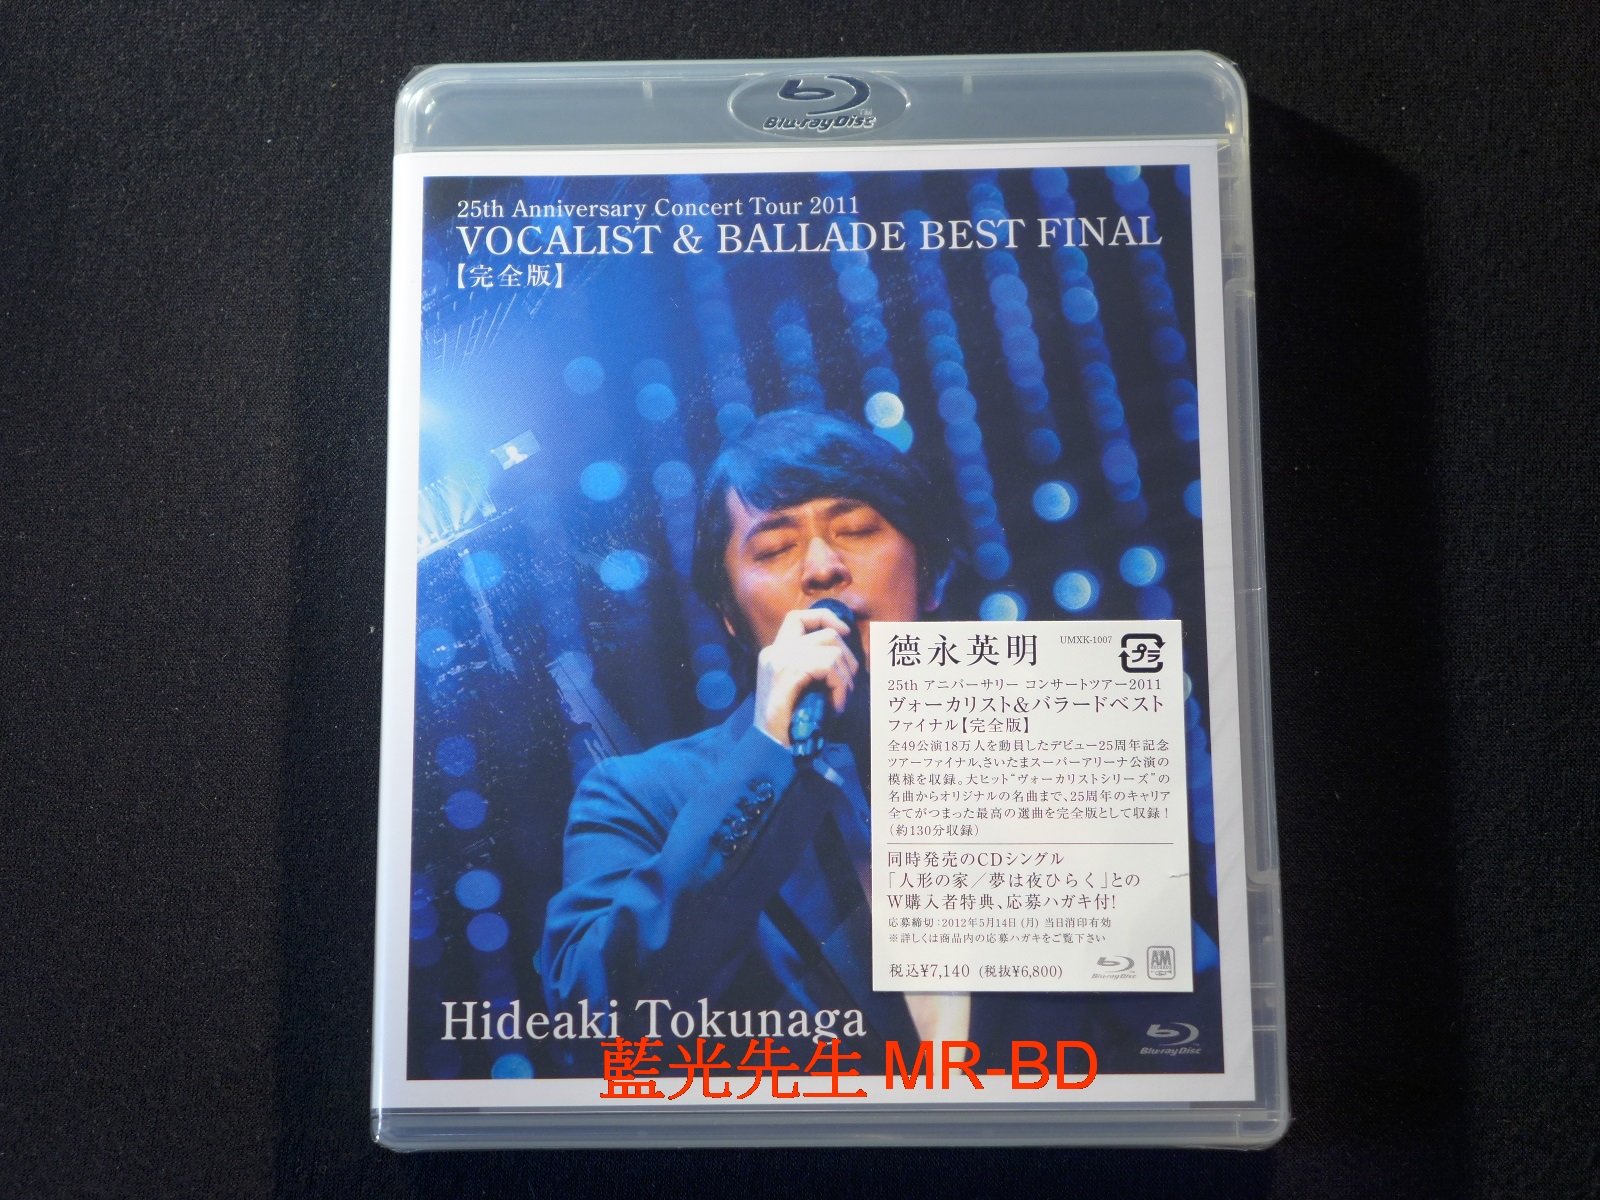 藍光BD] - 德永英明2011 25週年巡迴演唱會Hideaki Tokunaga 25th Anniversary Concert Tour  2011 Vocalist u0026 Ballade Best Final - PChome 商店街